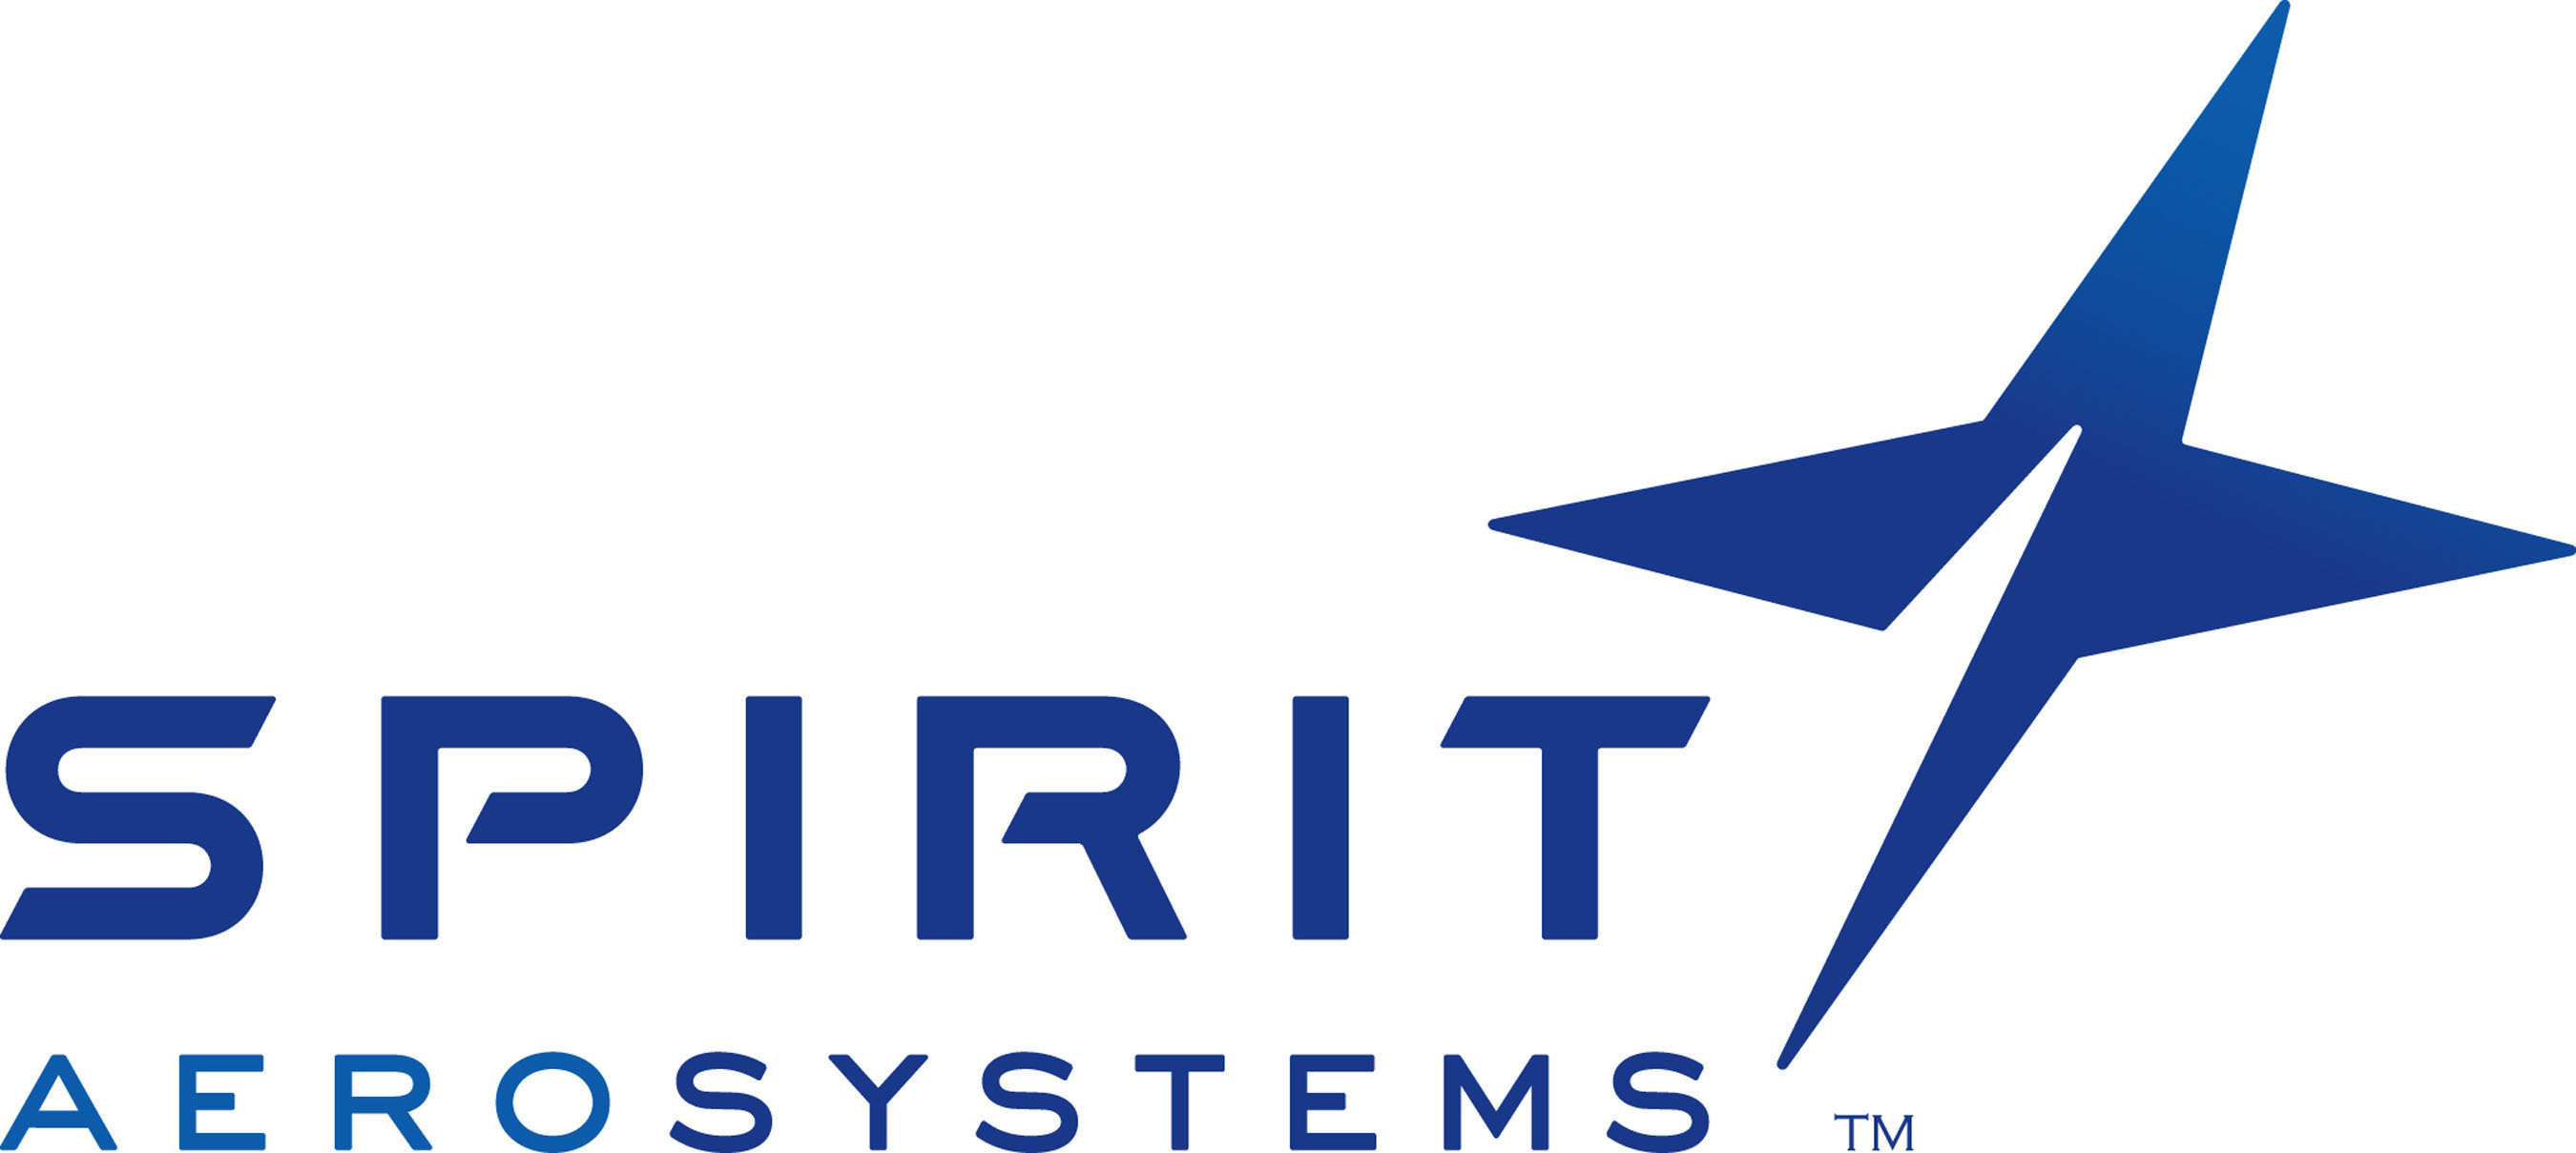 Spirit AeroSystems logo. (PRNewsFoto/Spirit AeroSystems, Inc.) (PRNewsFoto/)